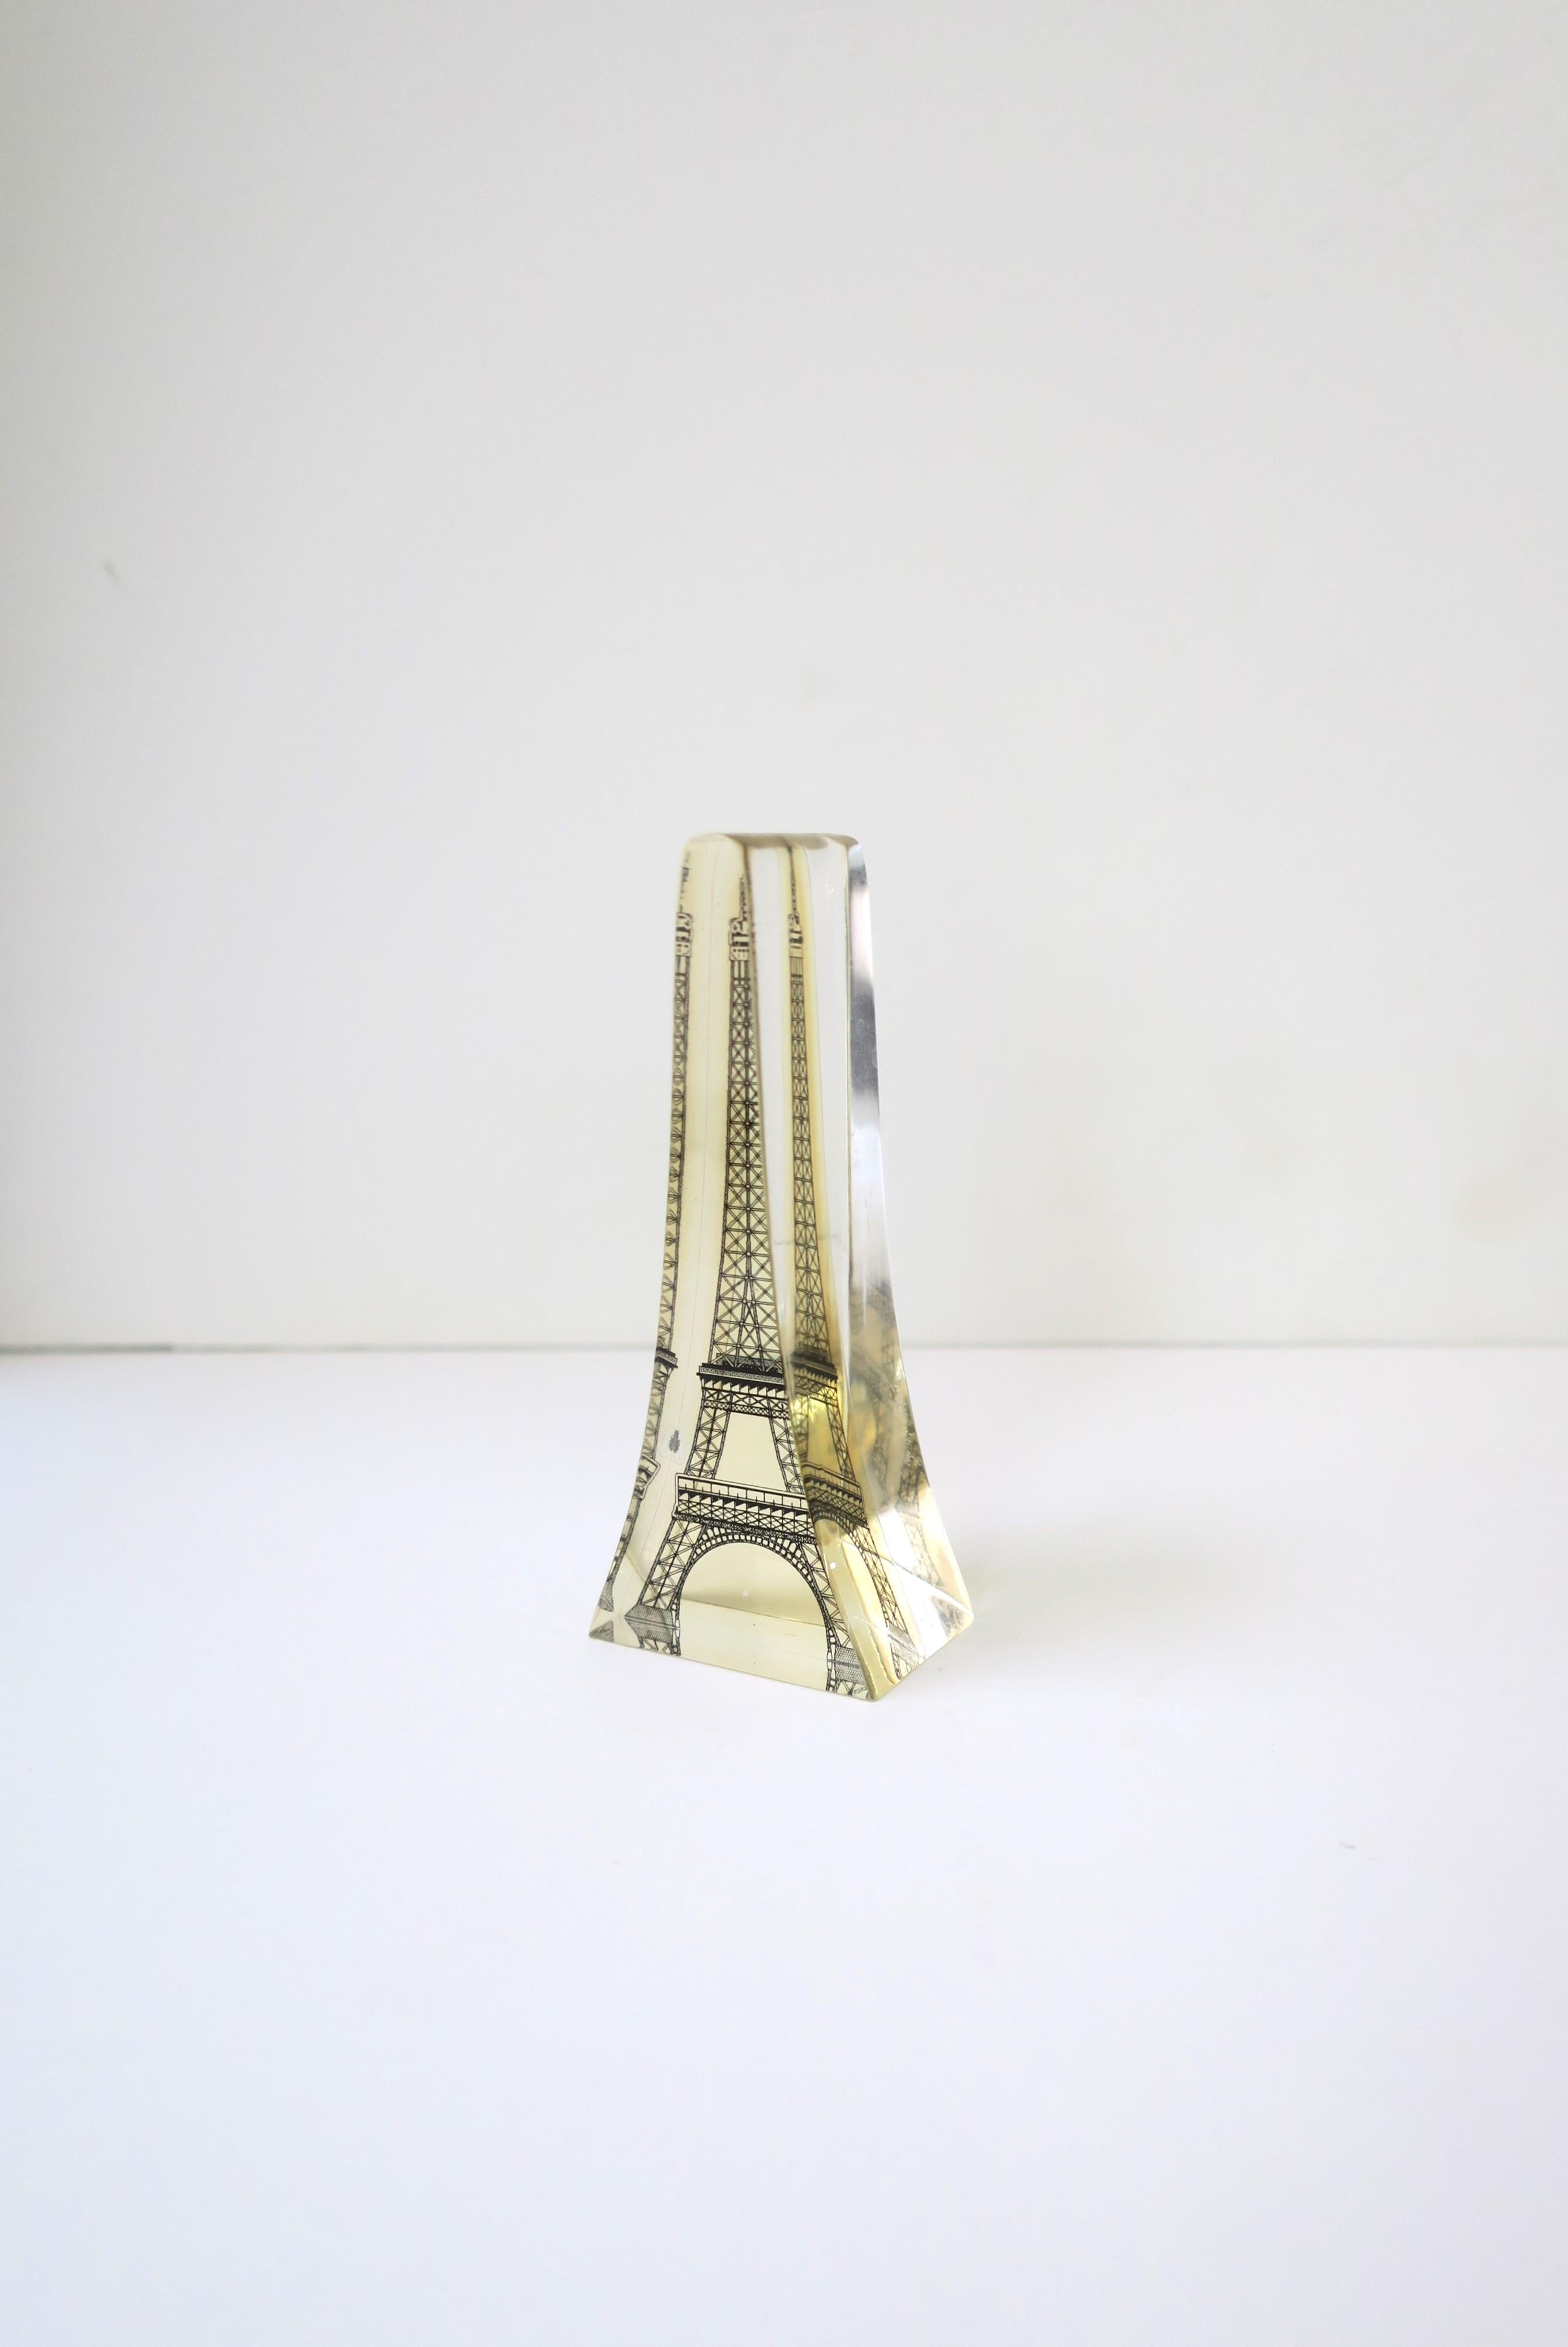 Paris Eiffel Tower in the style of Brazilian Artist Abraham Palatnik For Sale 1